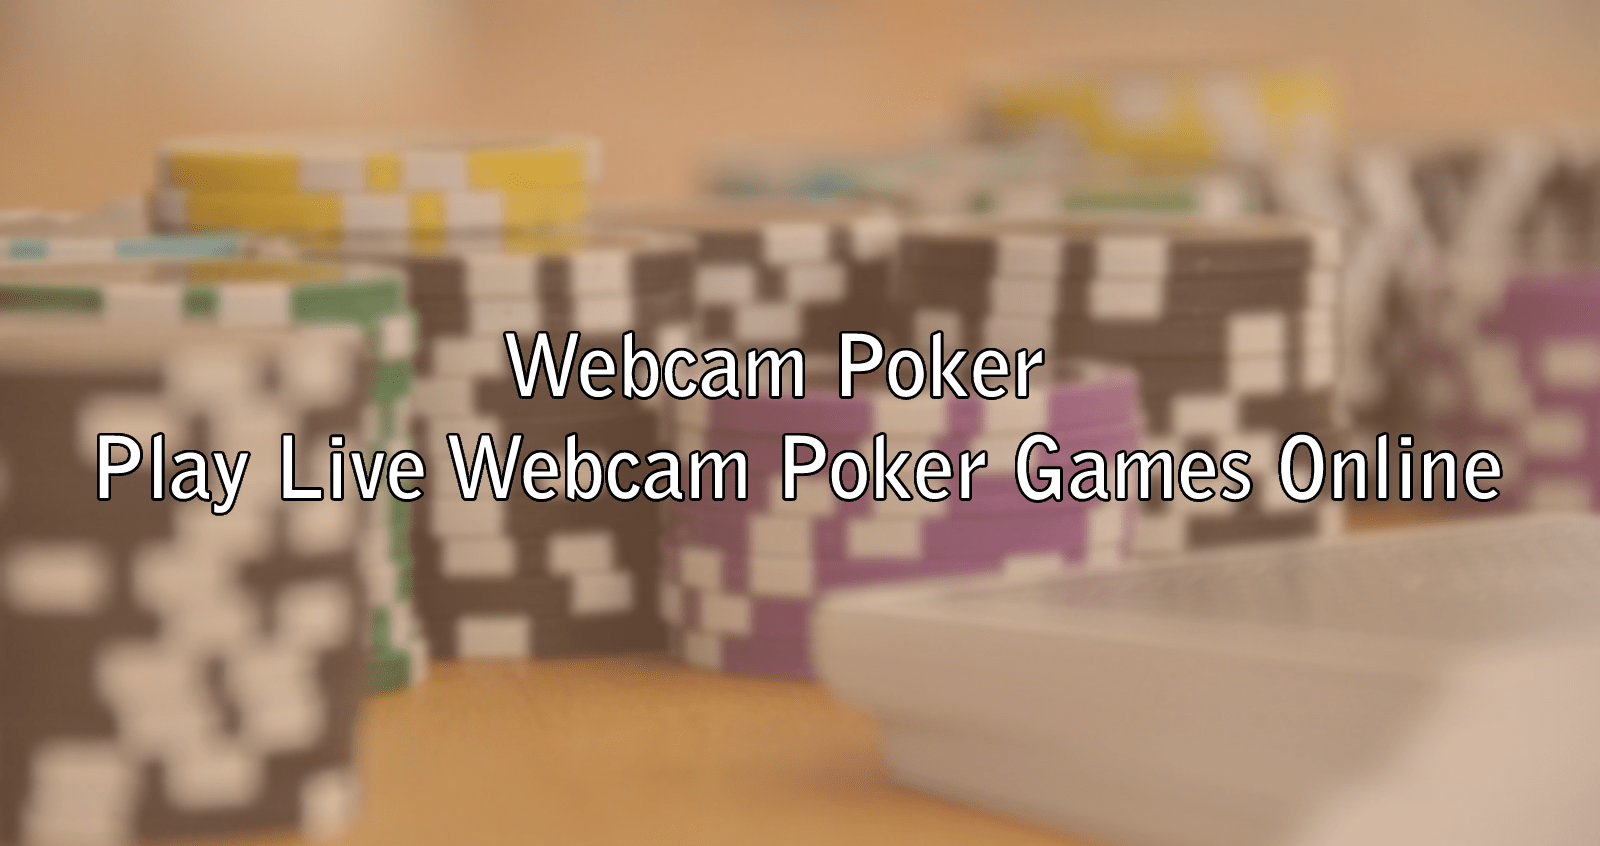 Webcam Poker - Play Live Webcam Poker Games Online